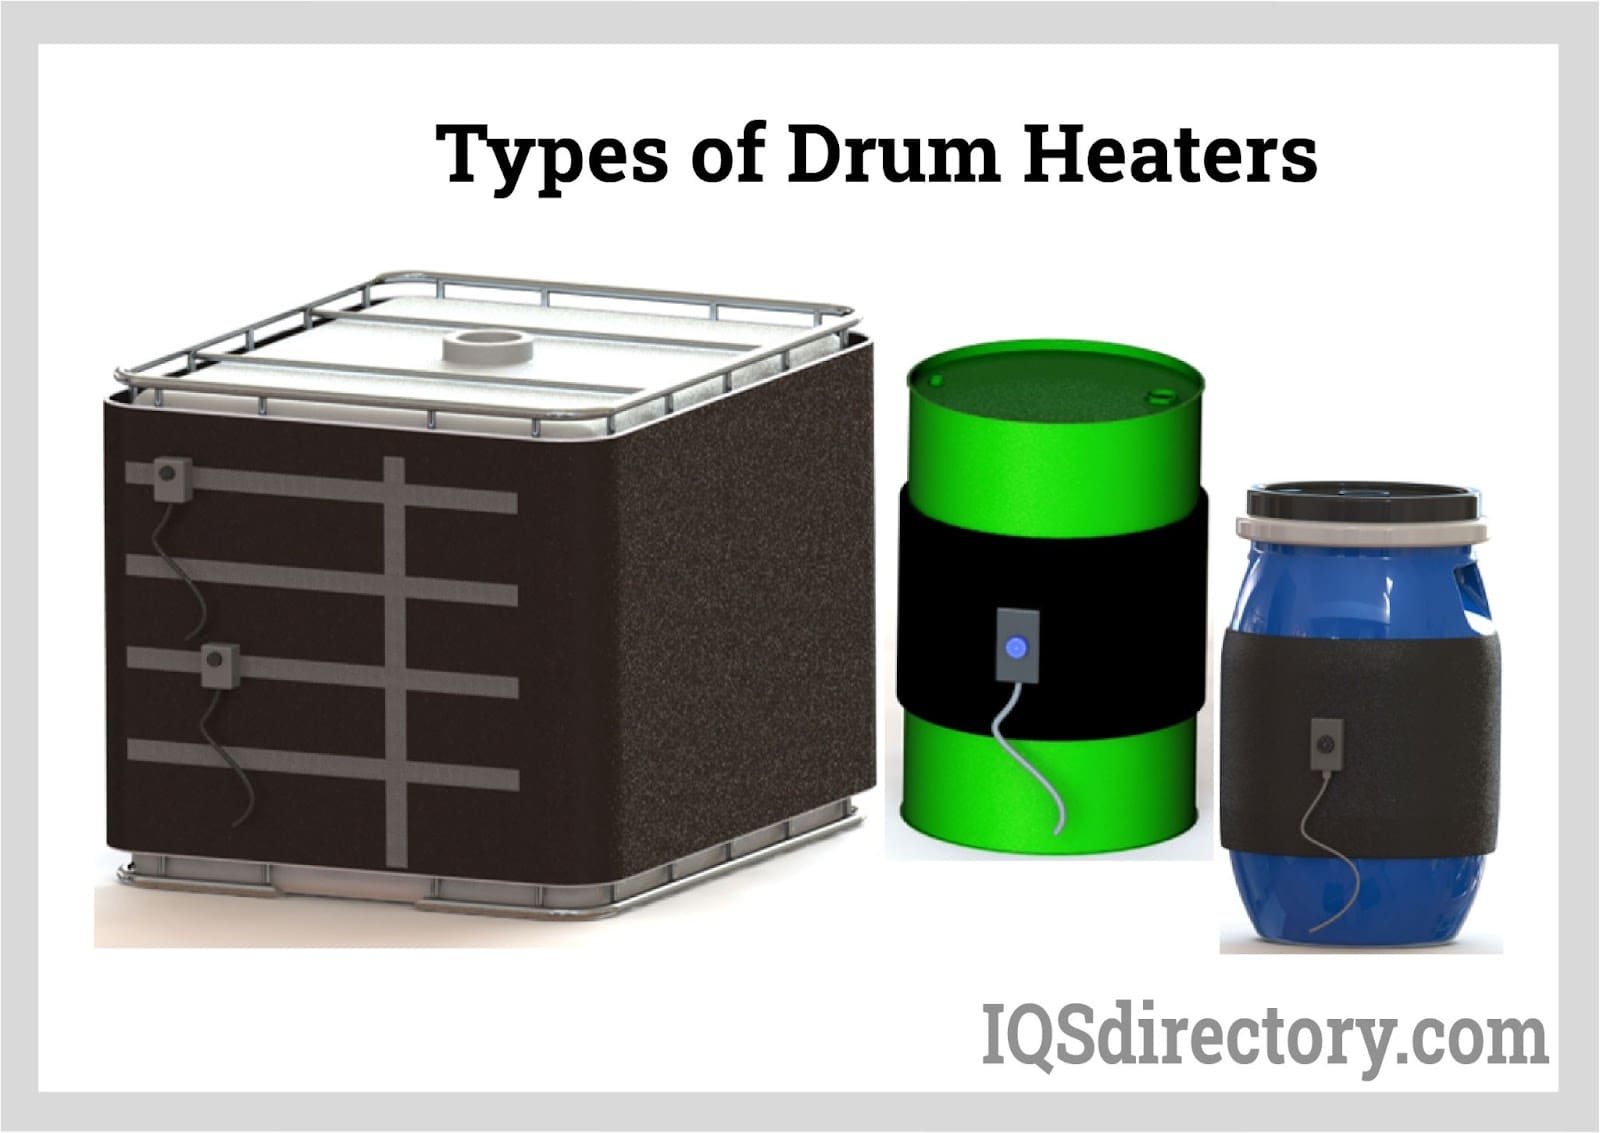 Types of Drum Heaters